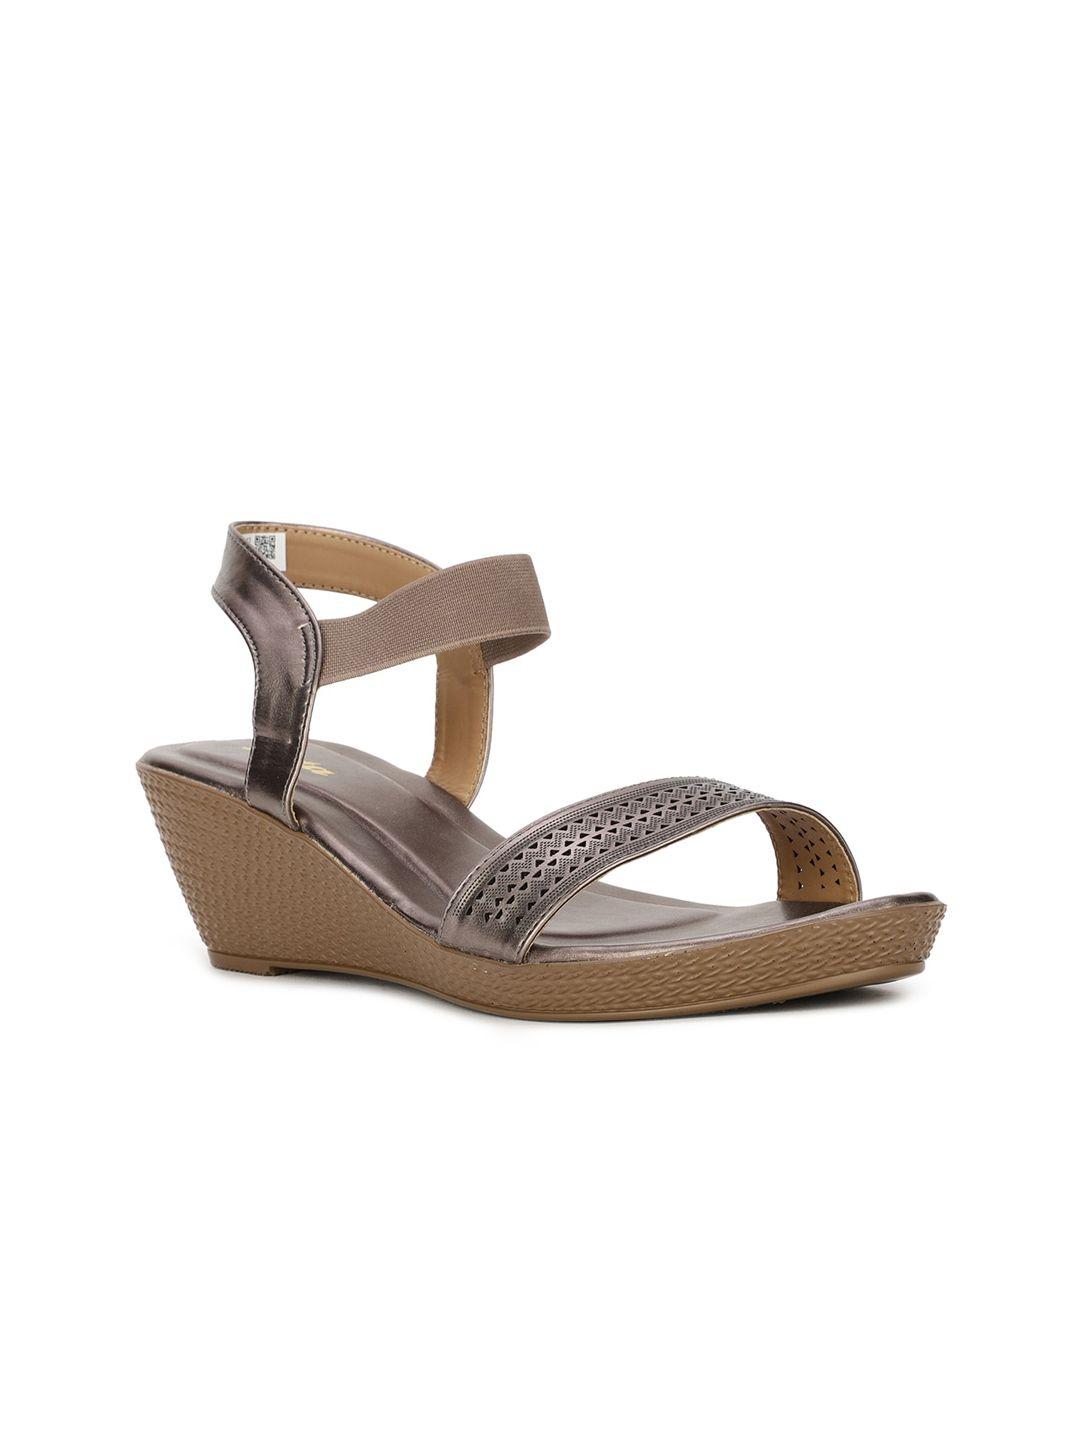 bata-tan-pu-wedge-sandals-with-laser-cuts